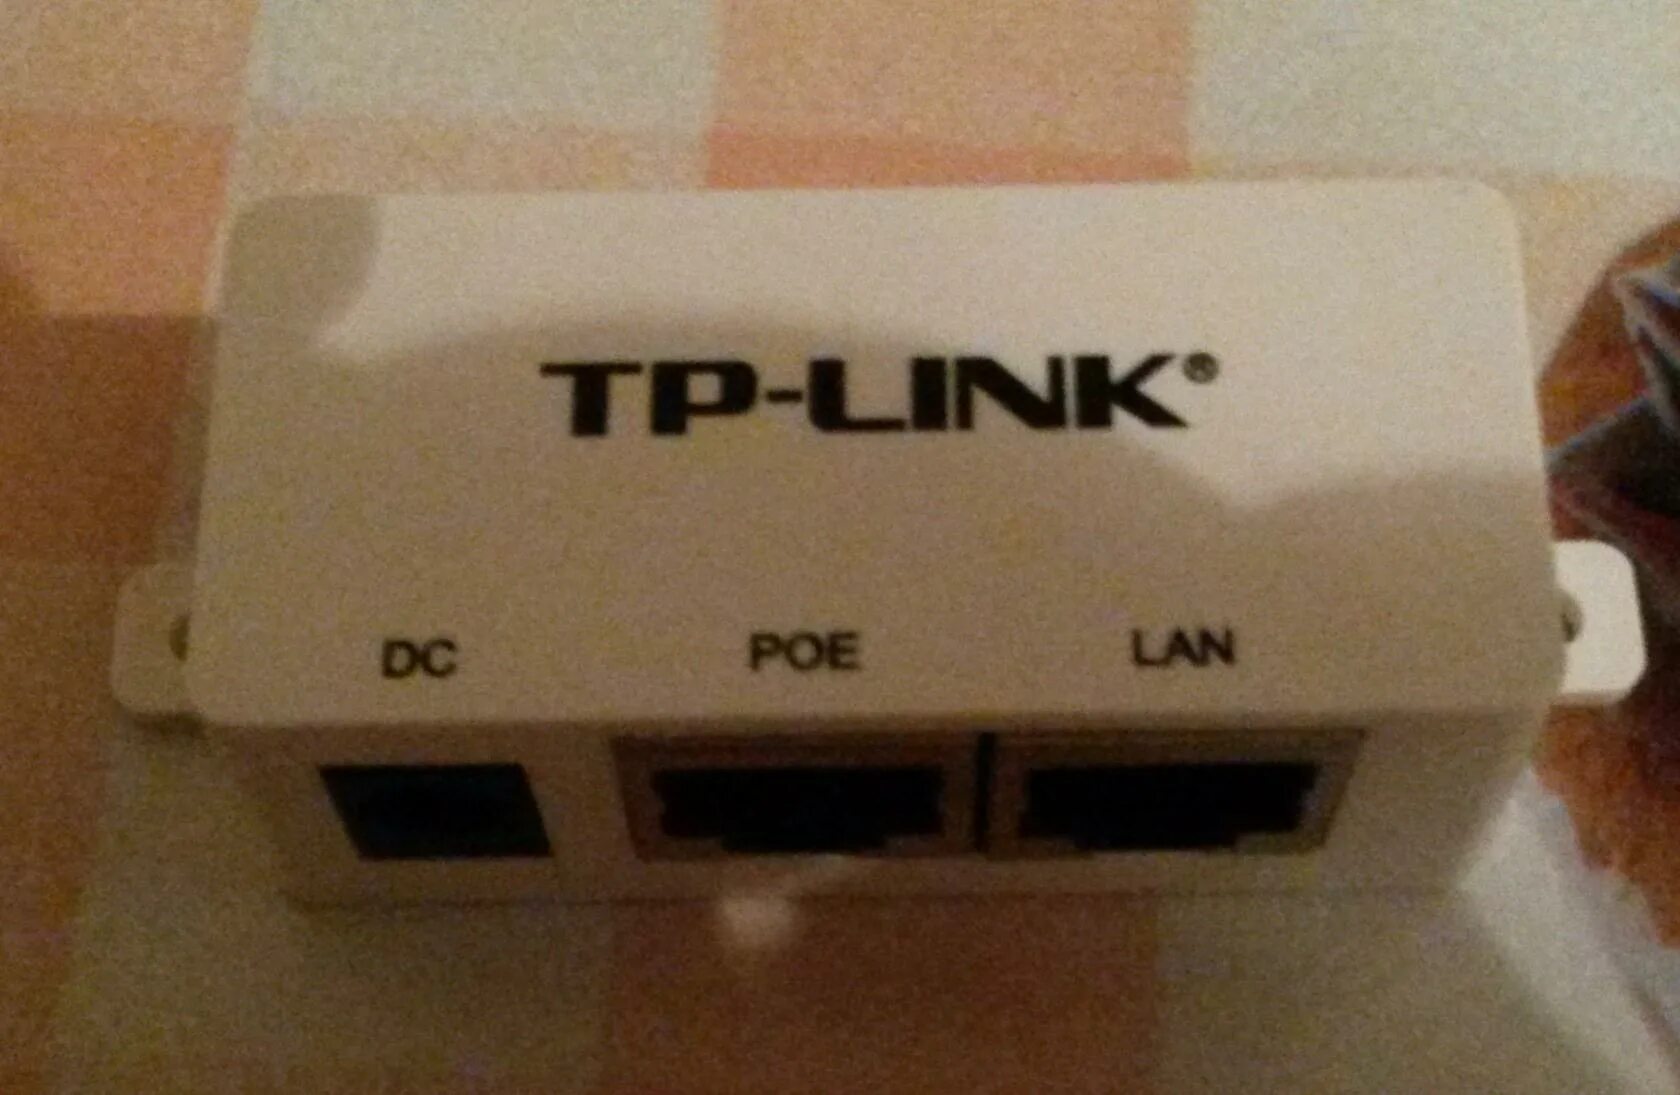 Poe инжектор tp link. TP link POE lan блок питания. Адаптер Power over Ethernet TP-link. TP-link DC POE lan 12v. POE инжектор 12v TP-link.